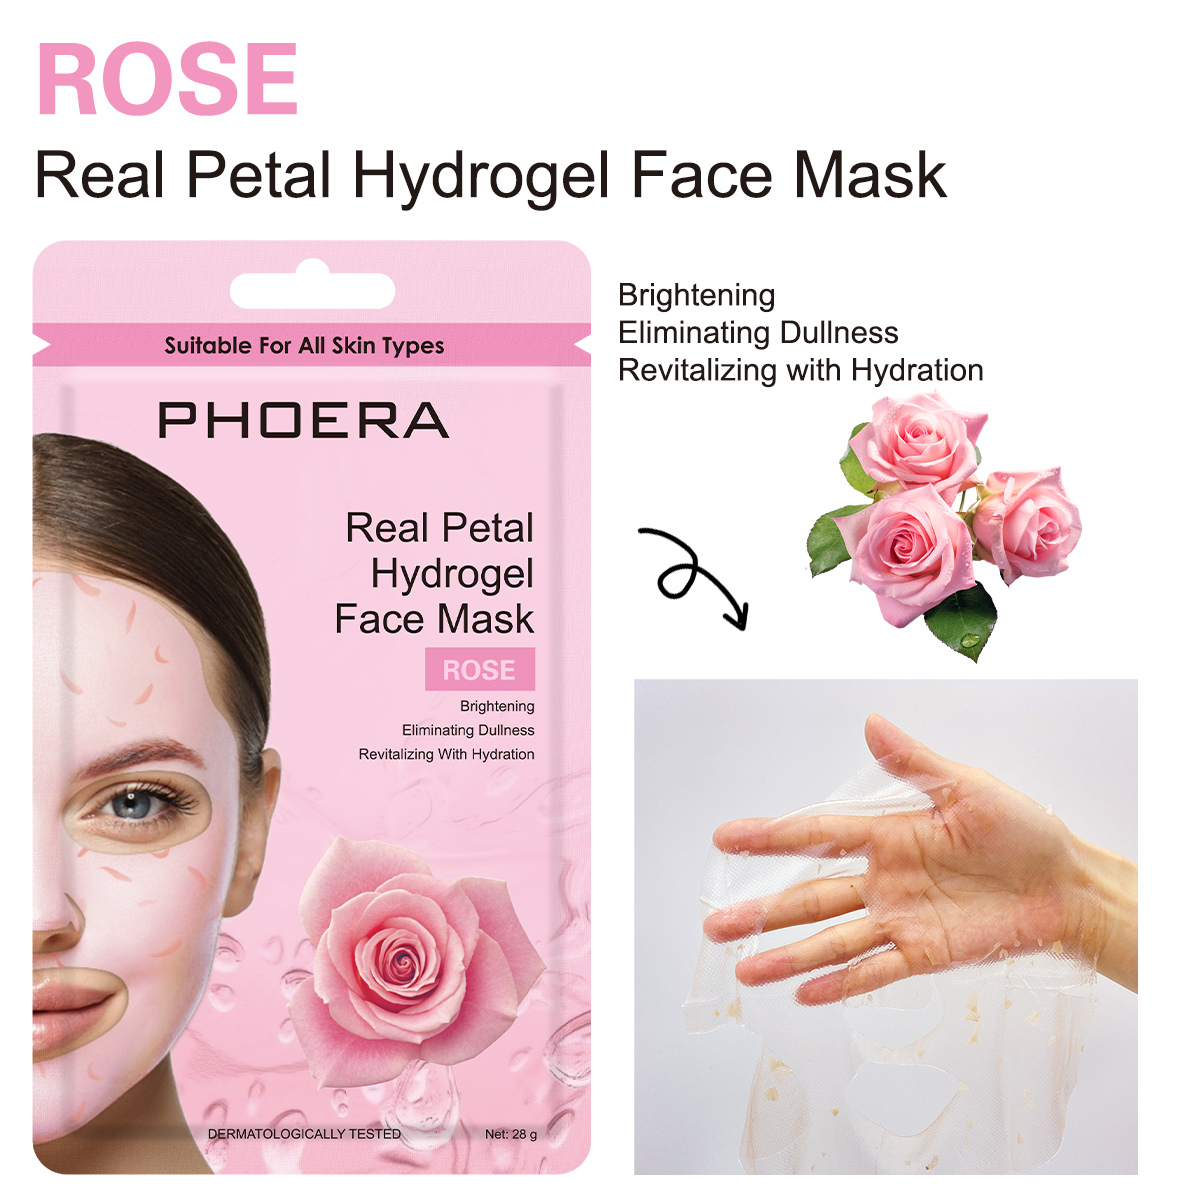 Real Petal Hydrogel Facial Mask